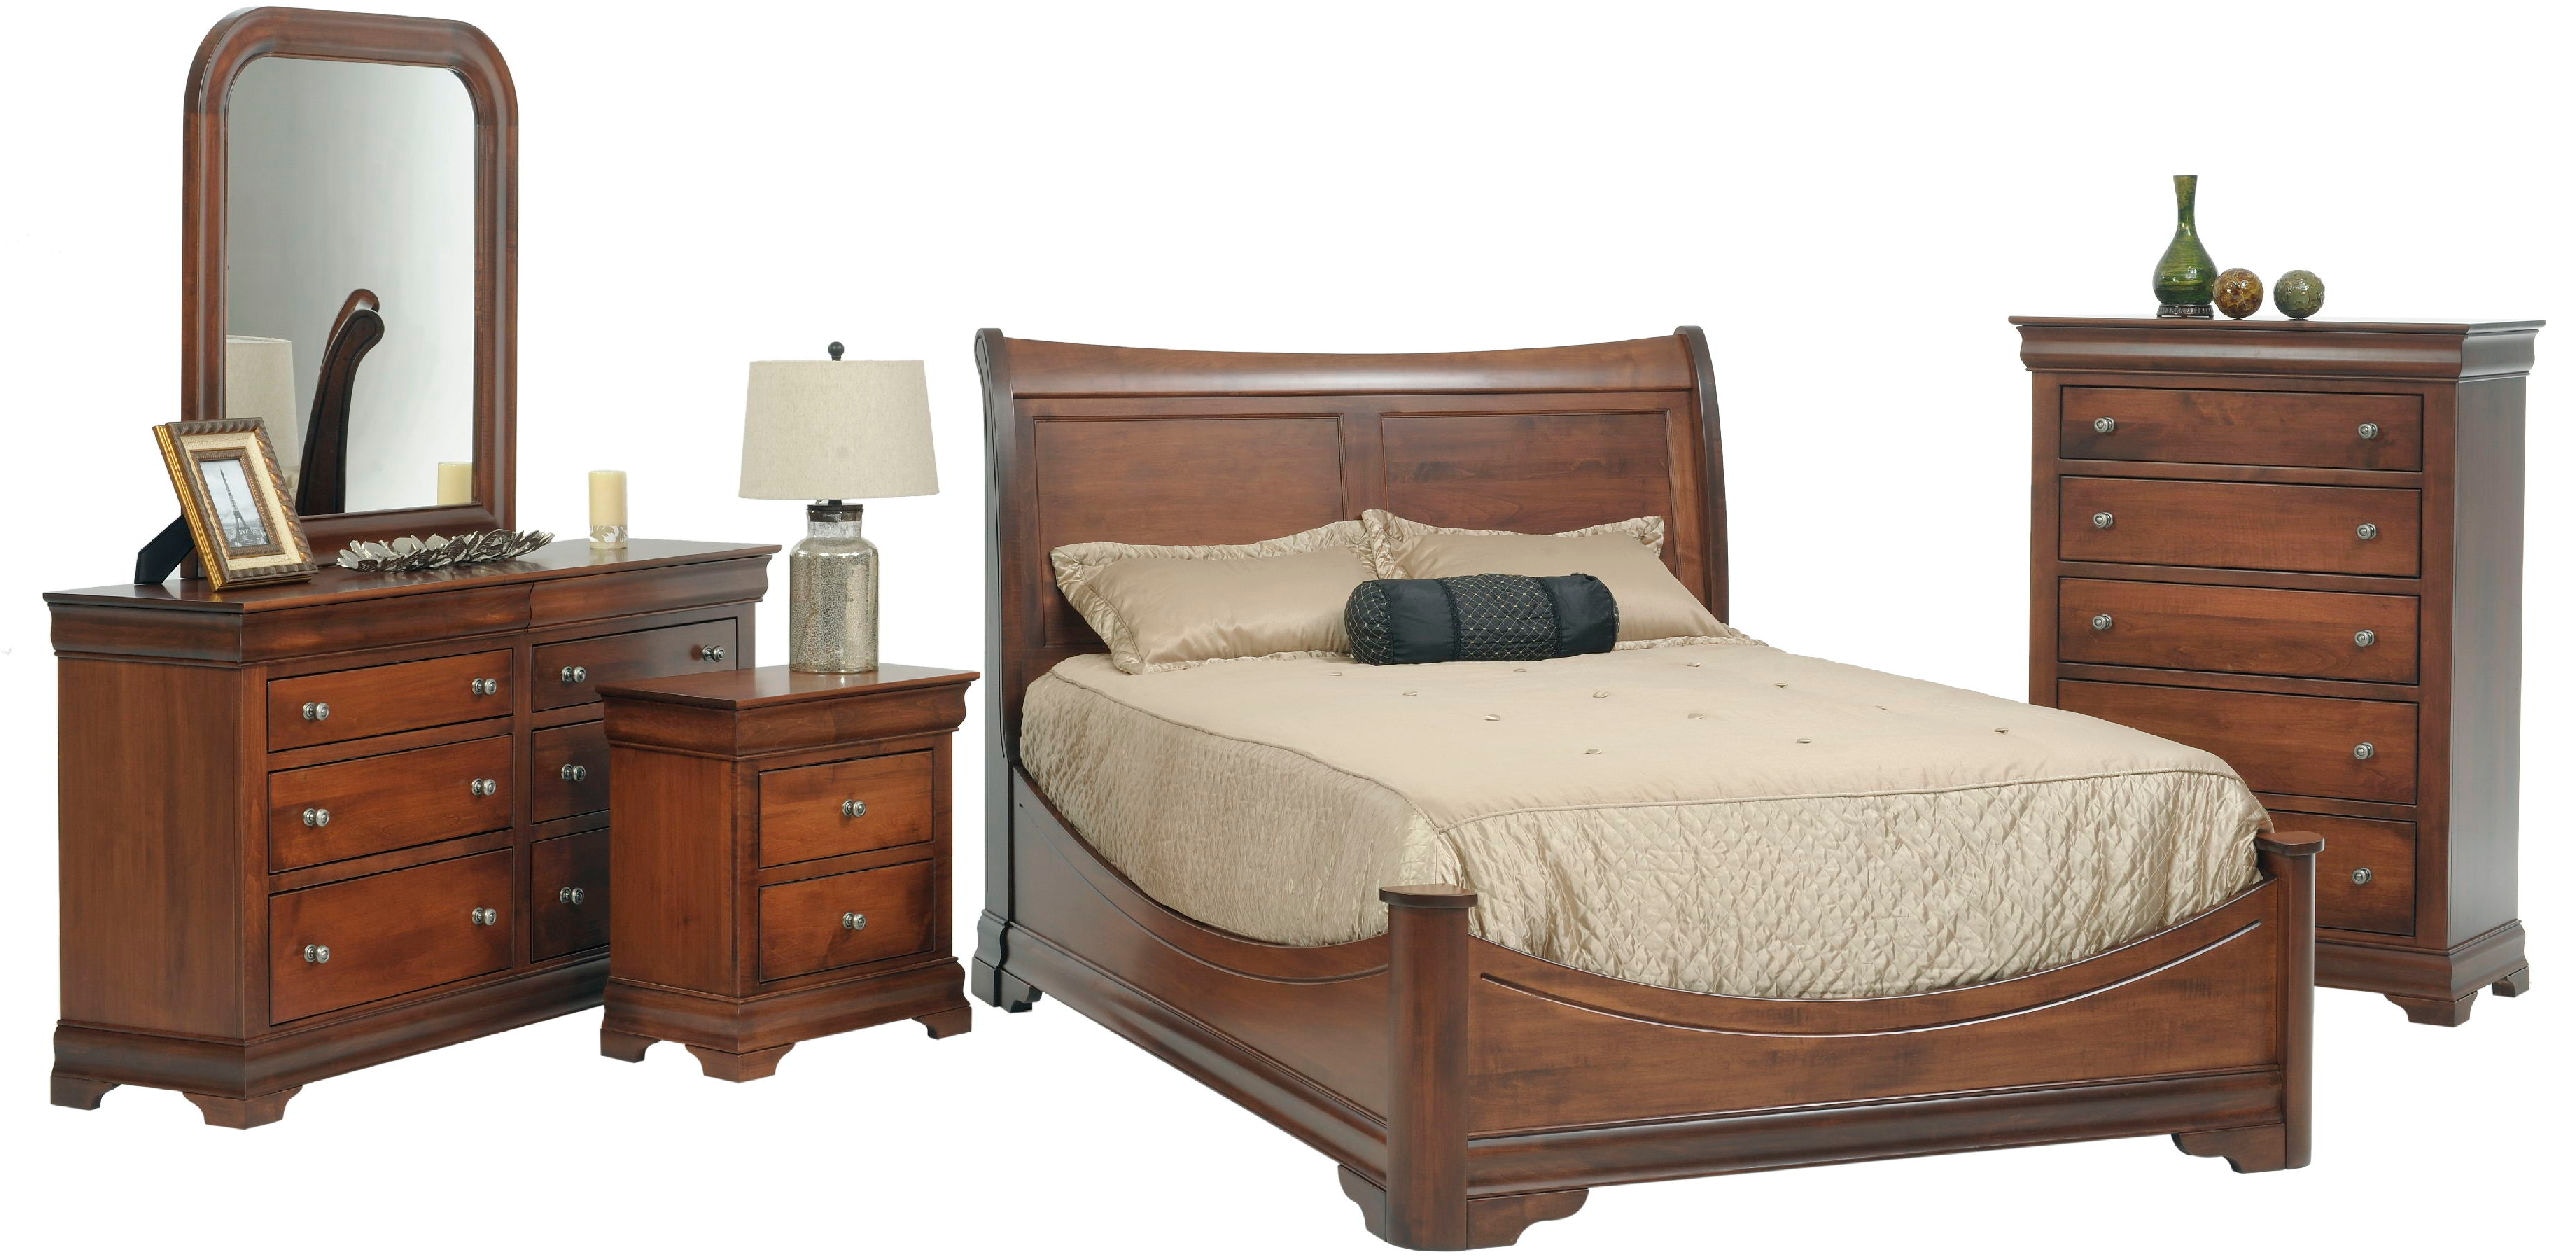 YUTZY WOODWORKING Bedroom Bordeaux Dresser 92005 - Whitley 